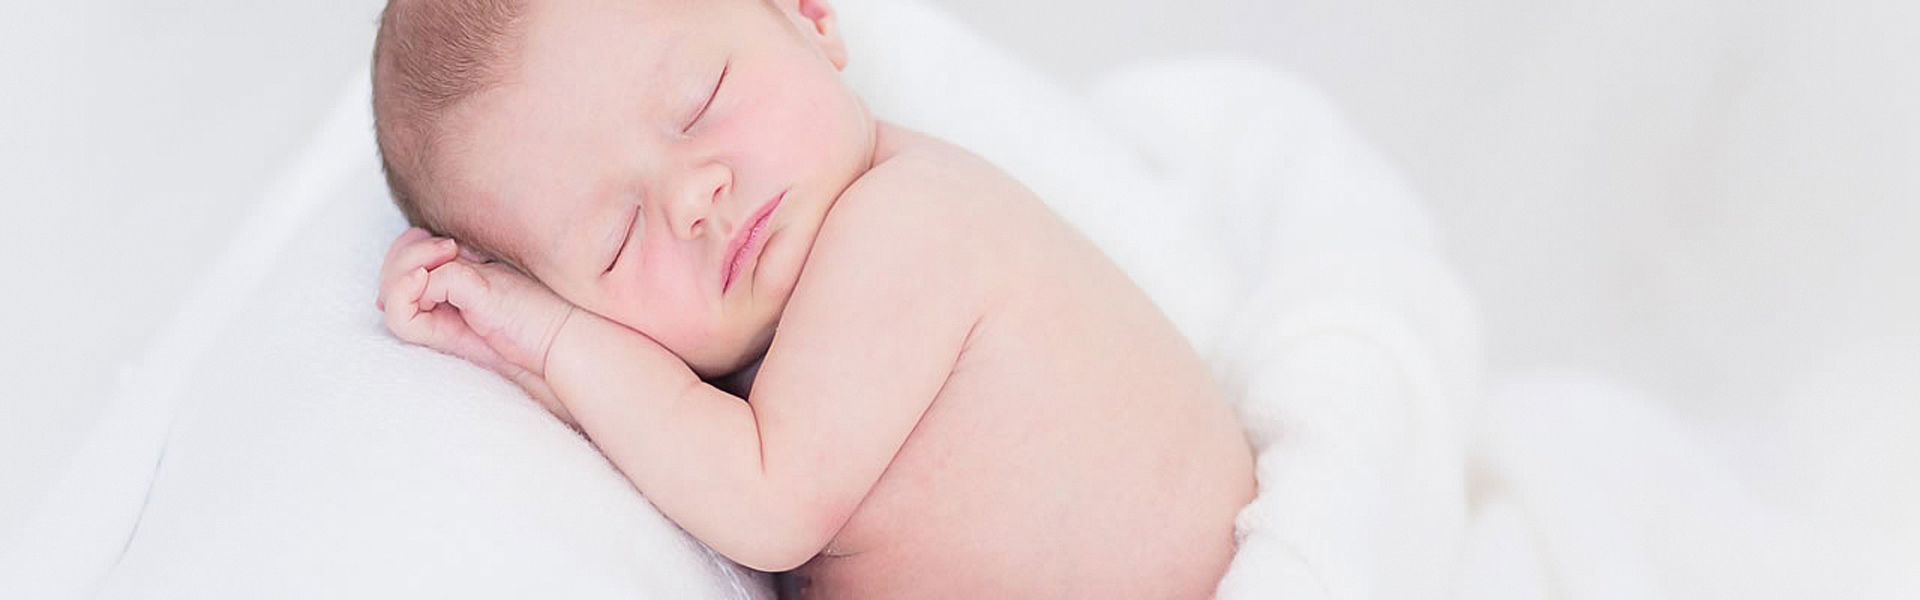 A sleeping baby | Breast feeding guidance from Holmwood Clinic